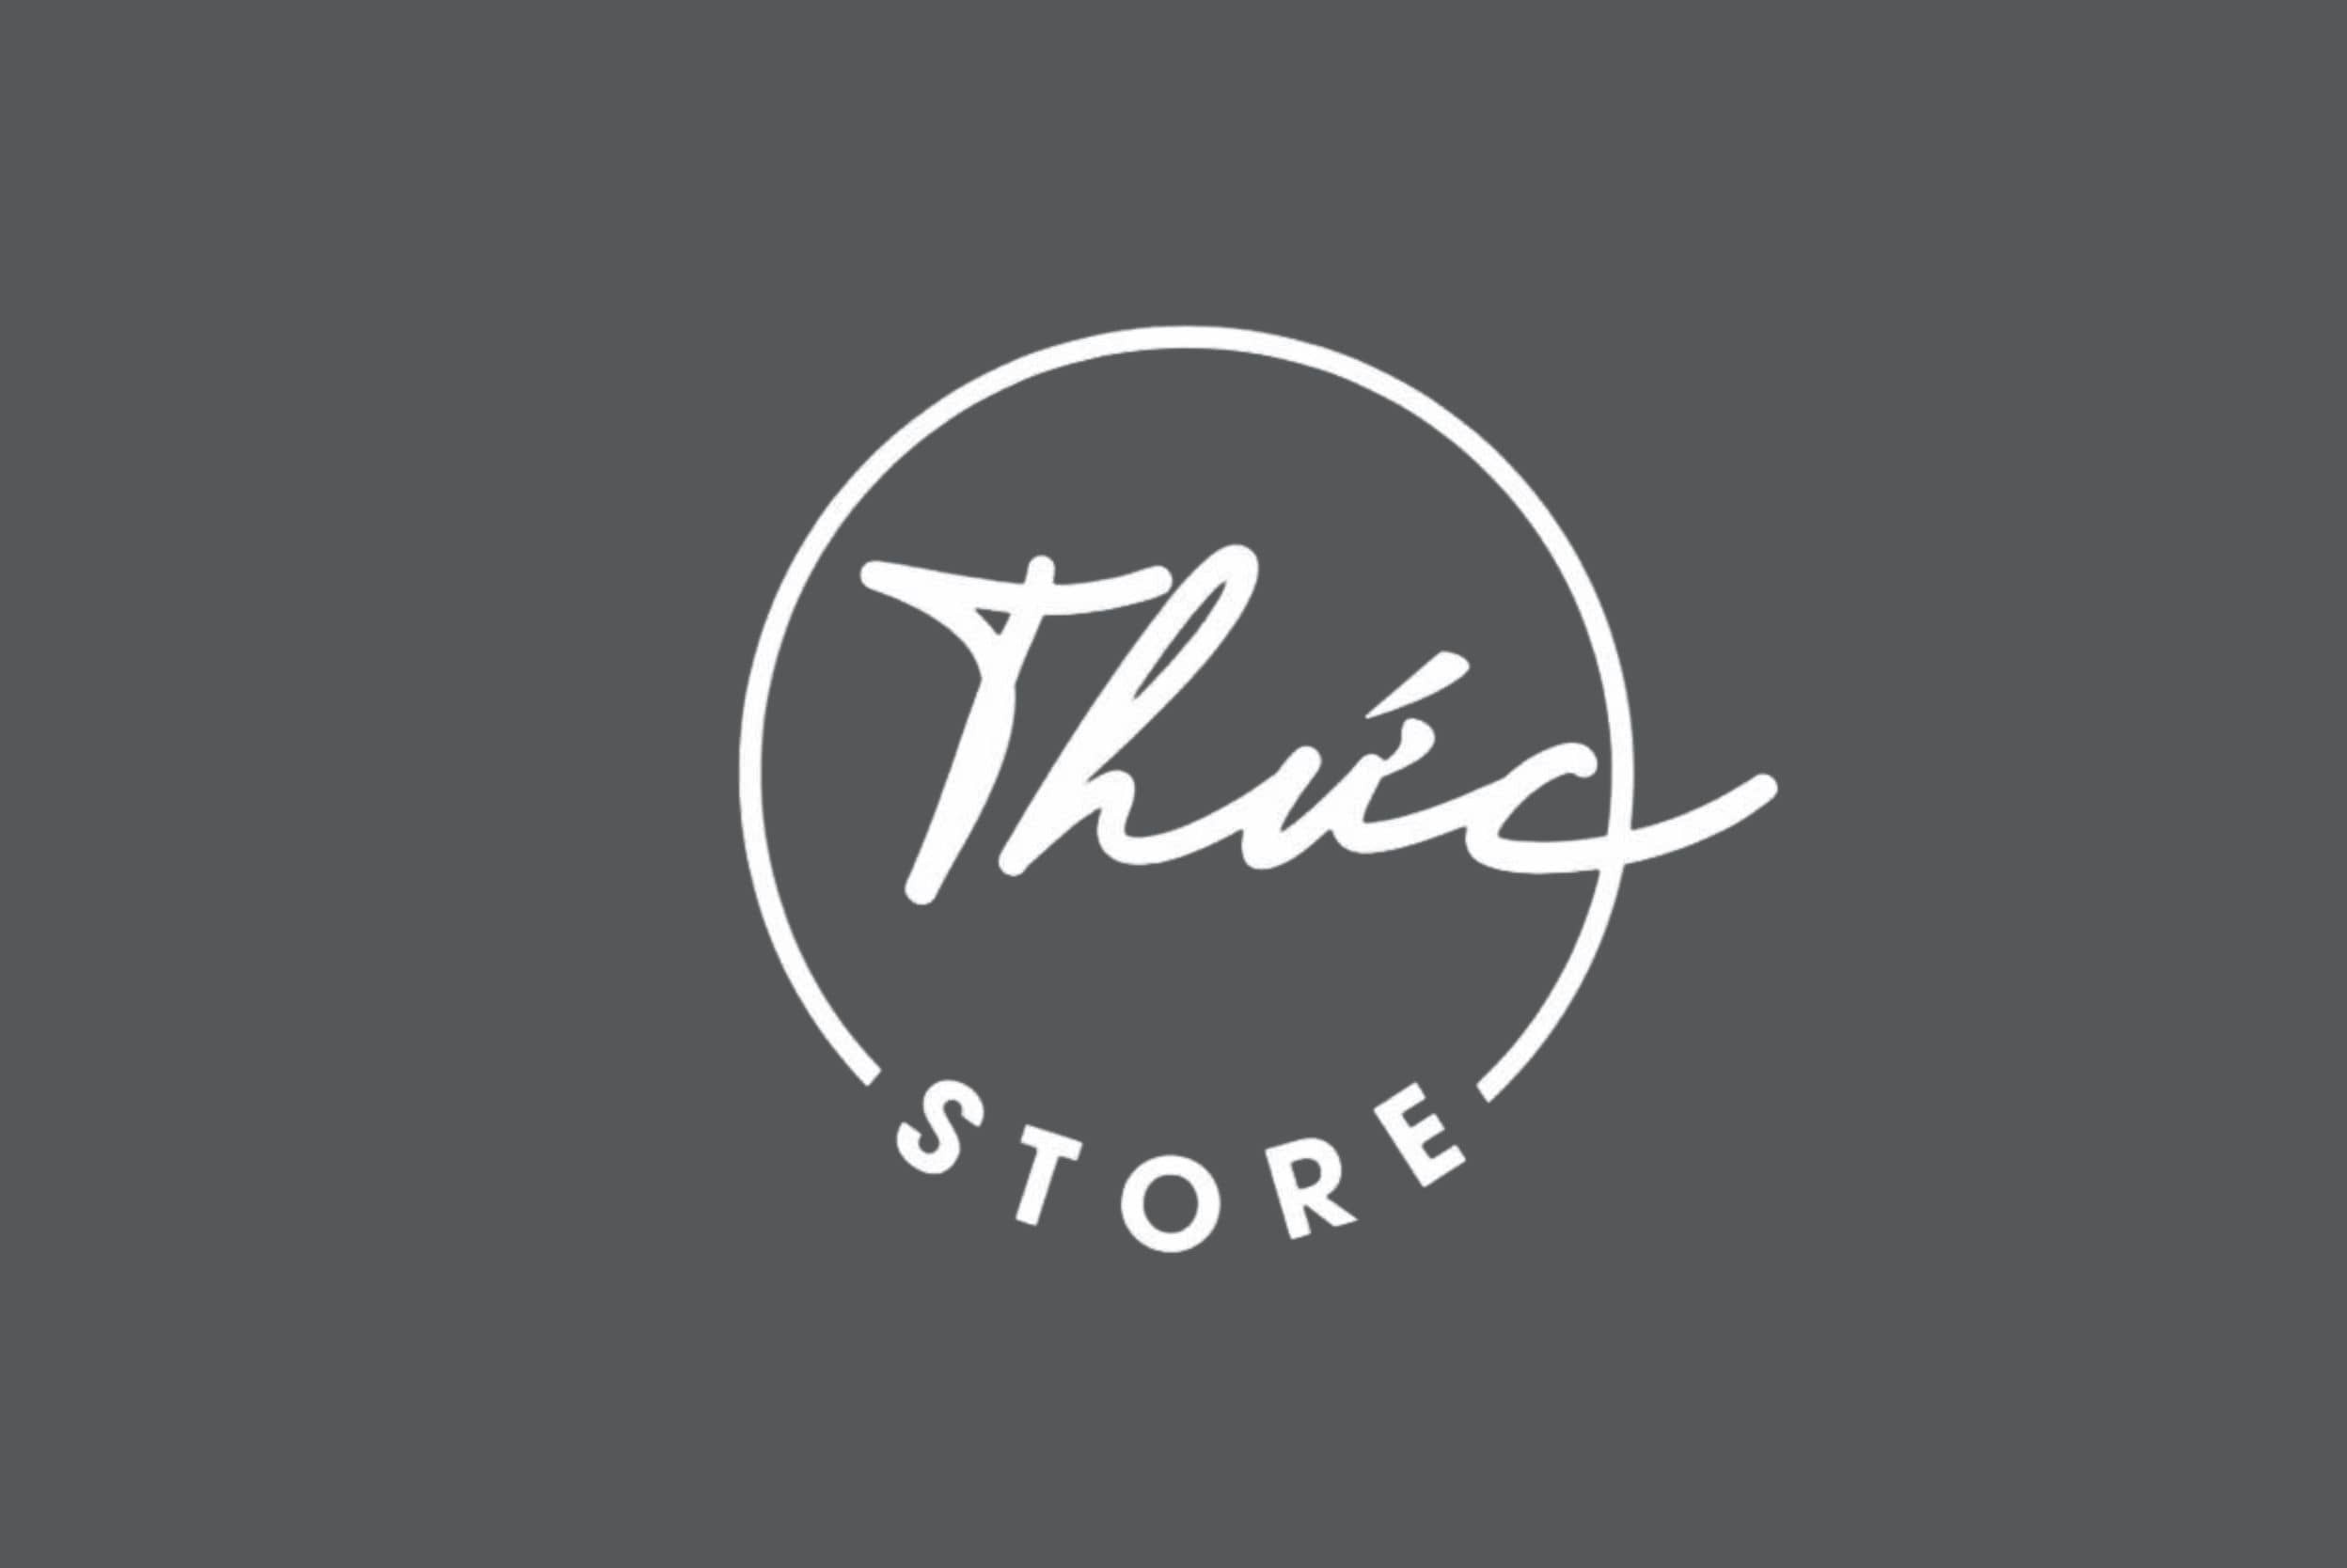 thuc-store-logo